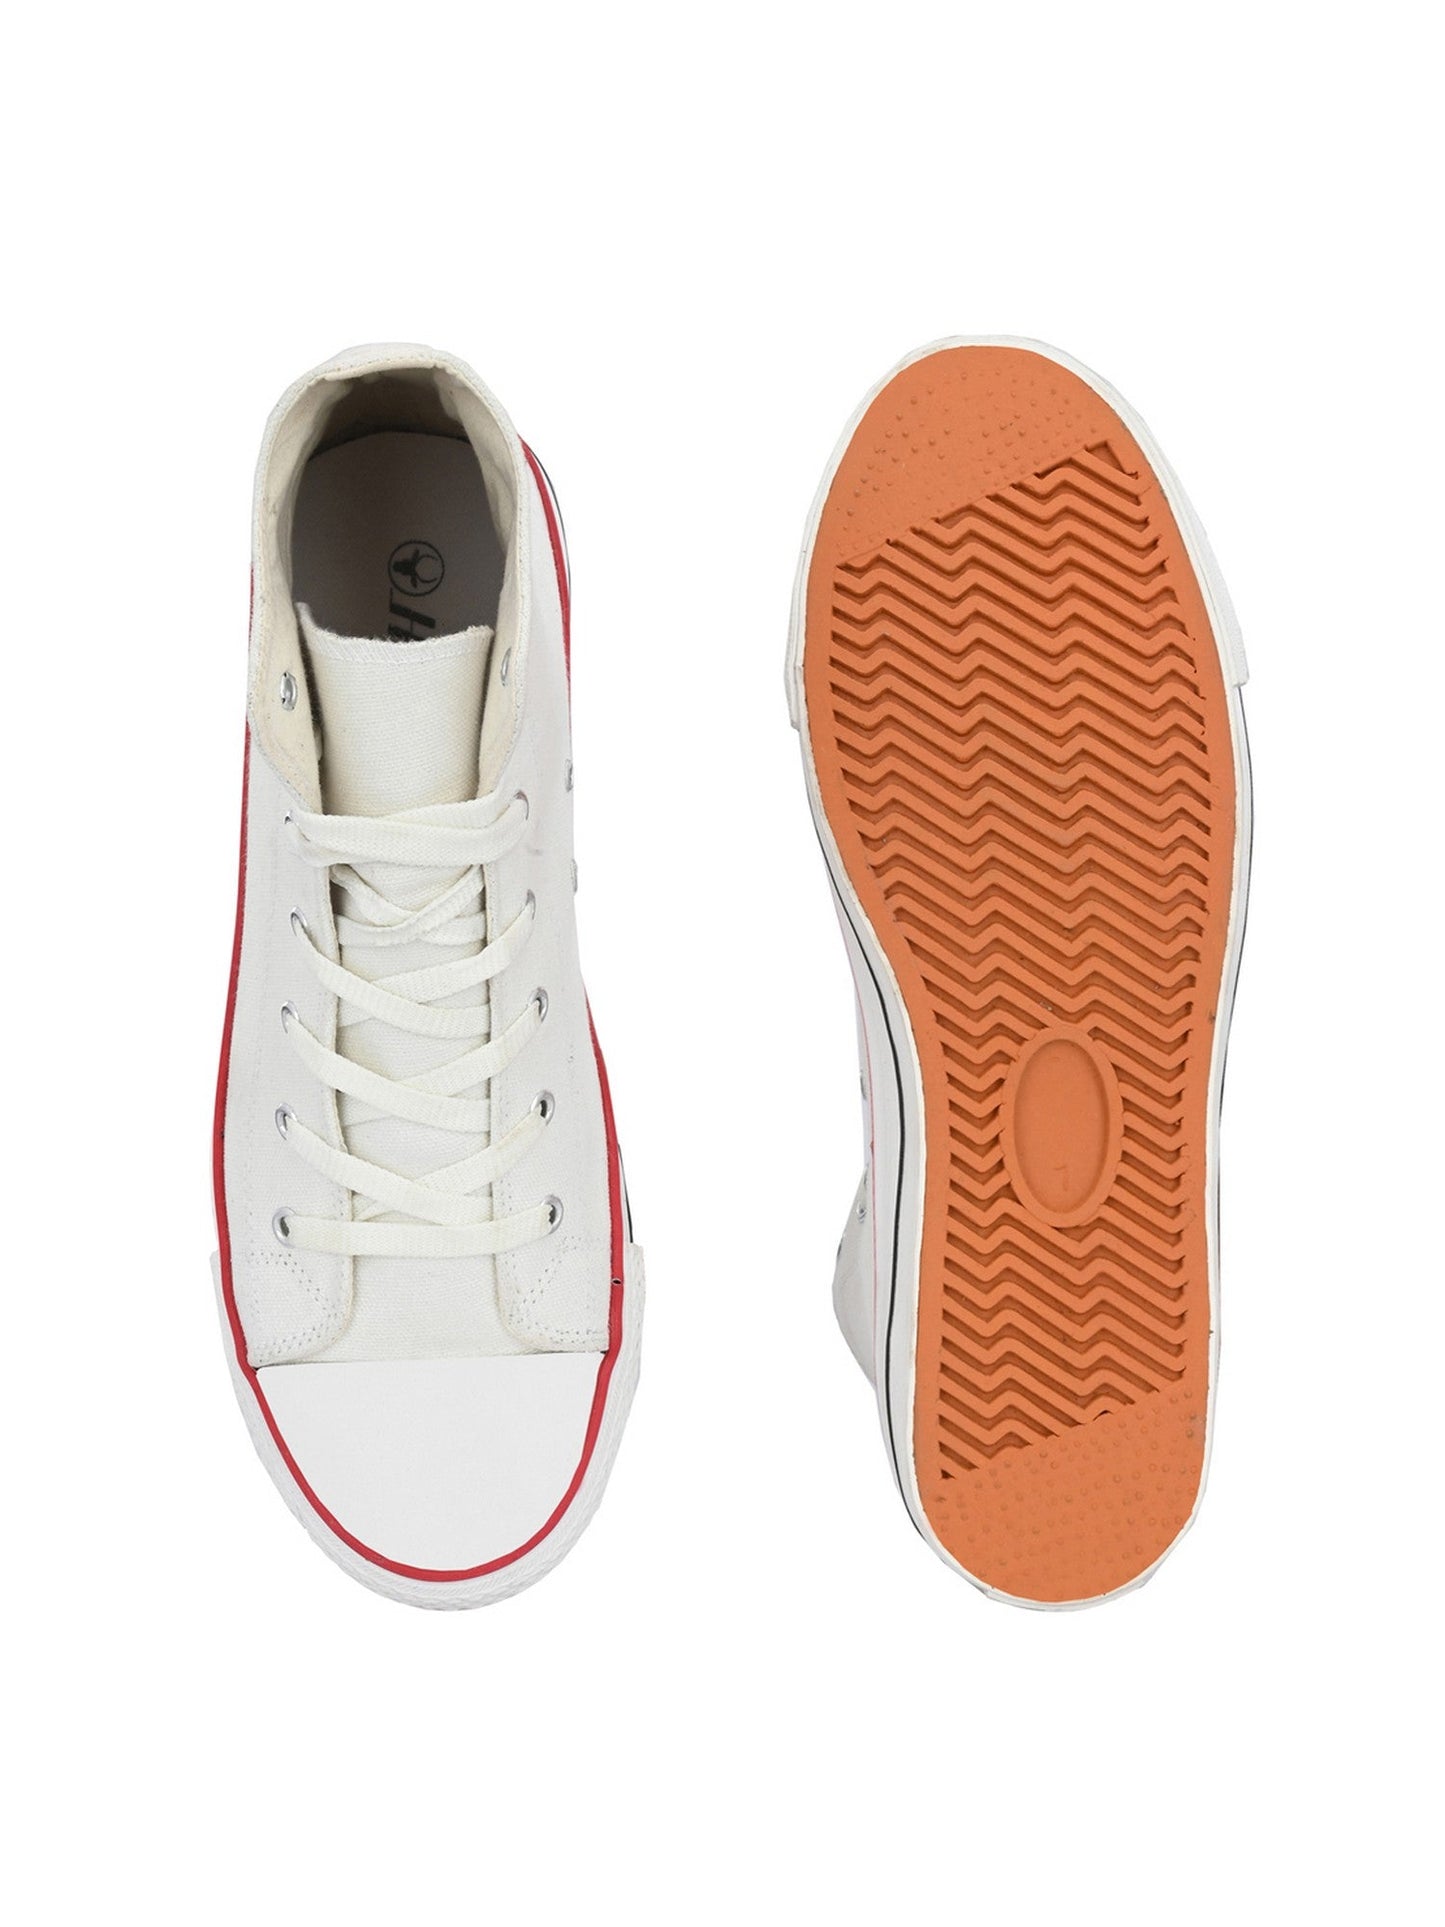 Hirolas® Men's white Canvas Vulcansied Skateboard Lace Up Ankle Length Sneaker Shoes (HRL2077WHT)